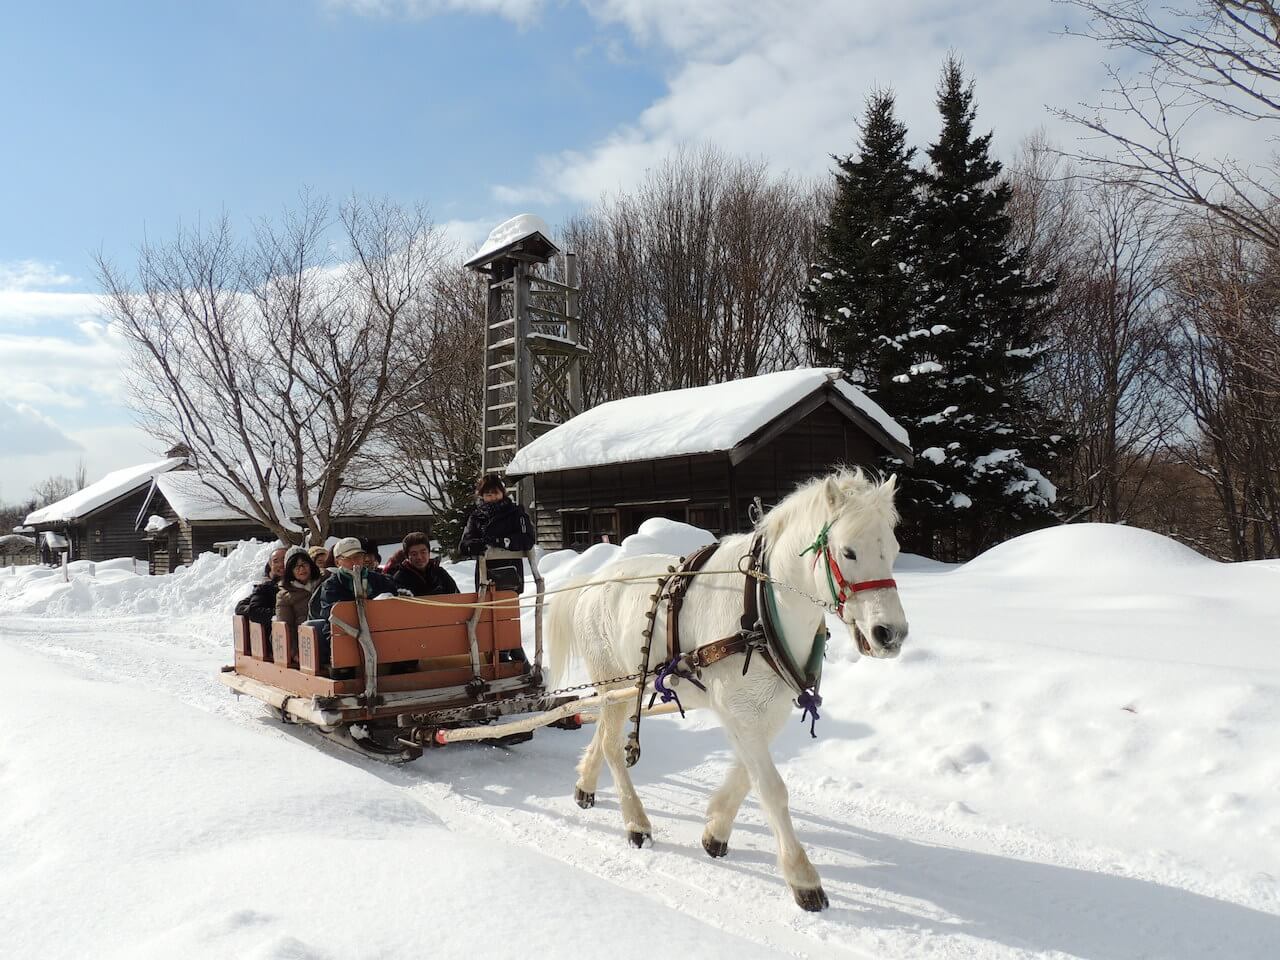 Historical Village of Hokkaido: Explore the Lost World of Colonial Hokkaido